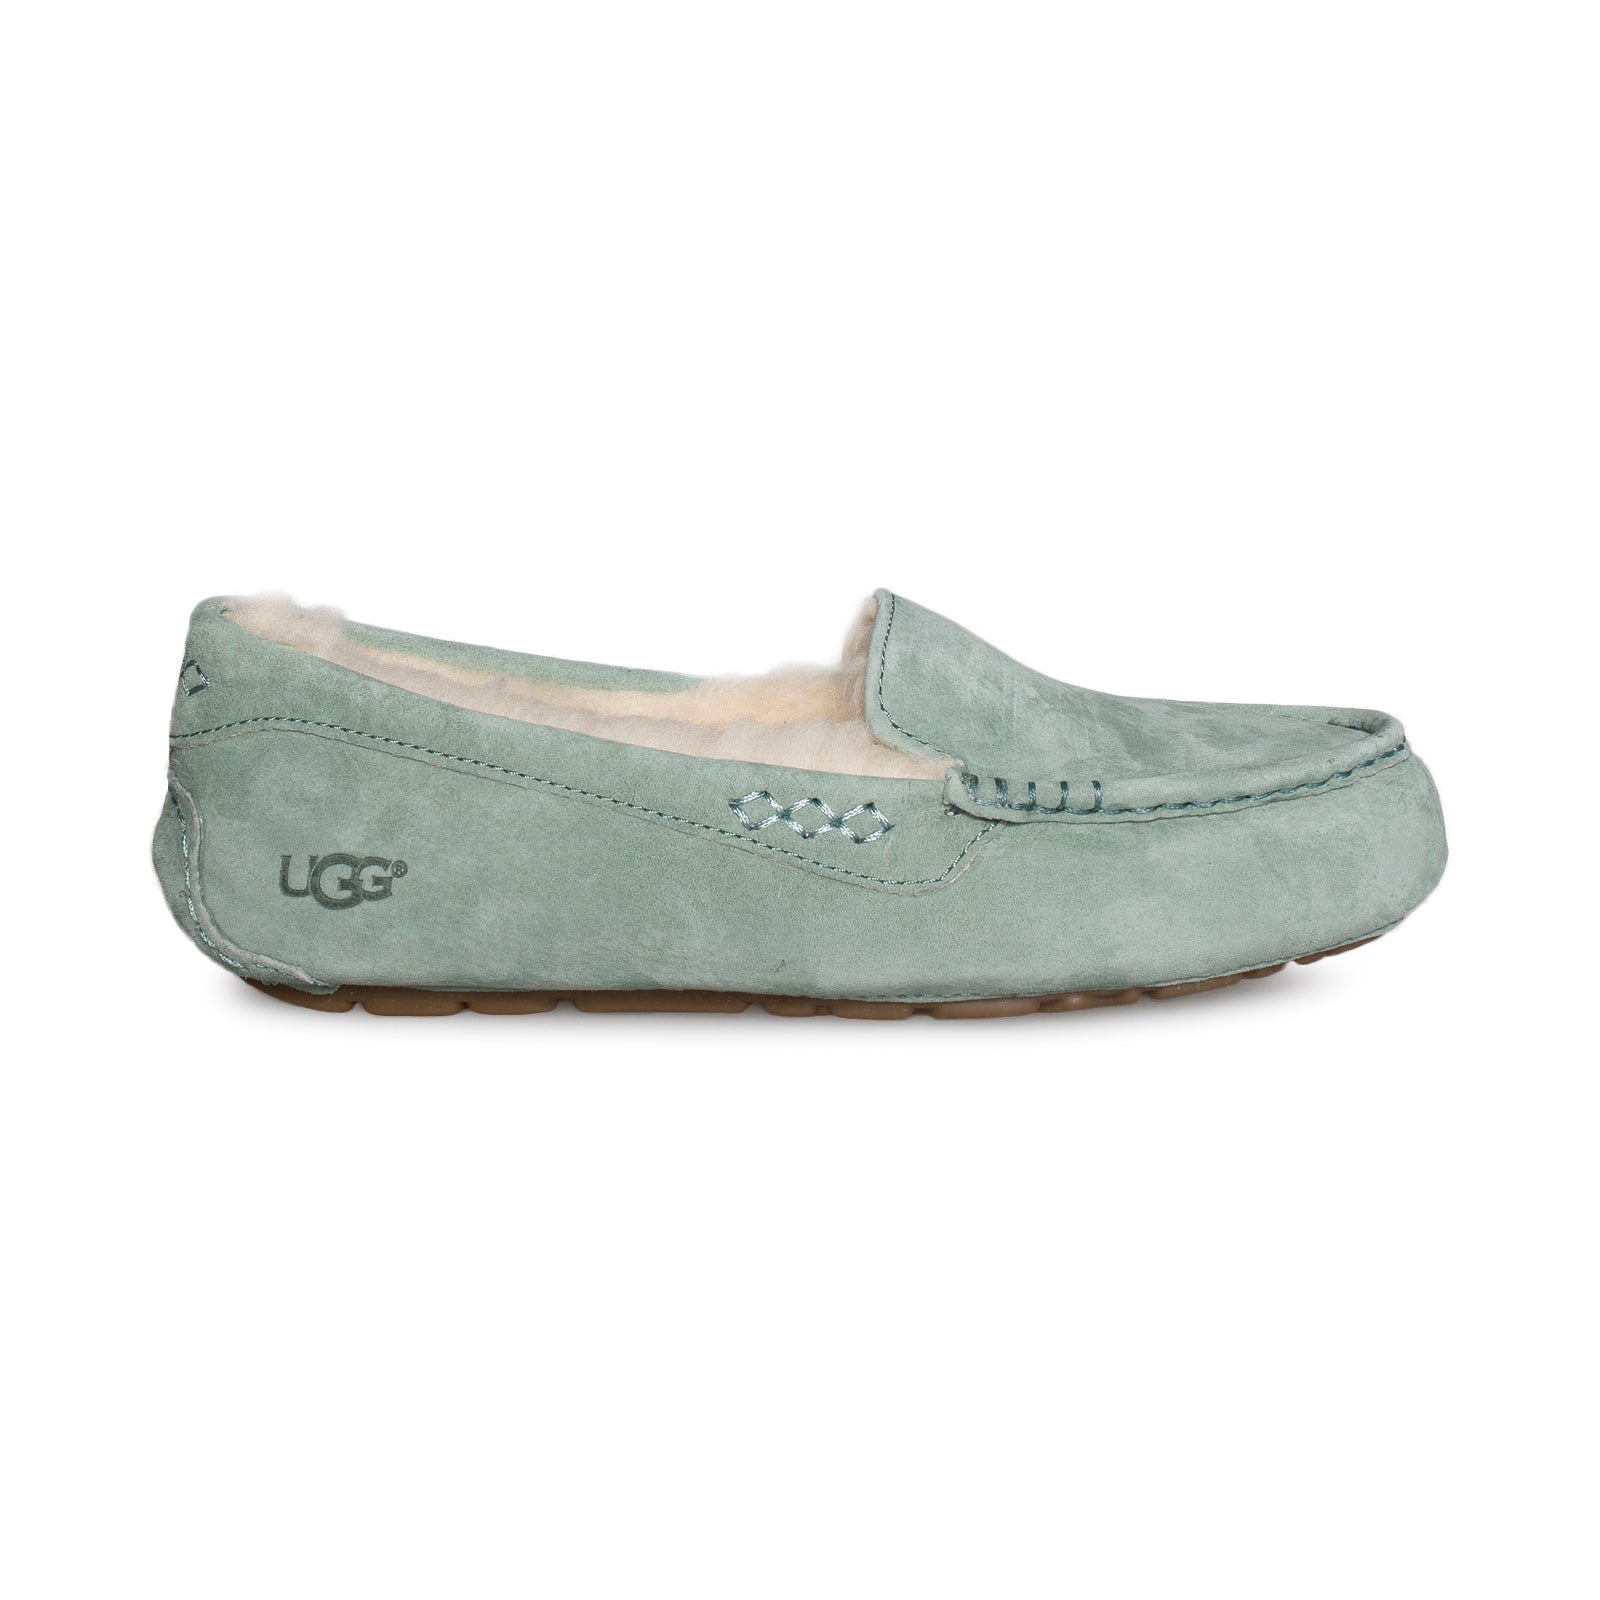 UGG Ansley Sea Green Slippers - Women's 